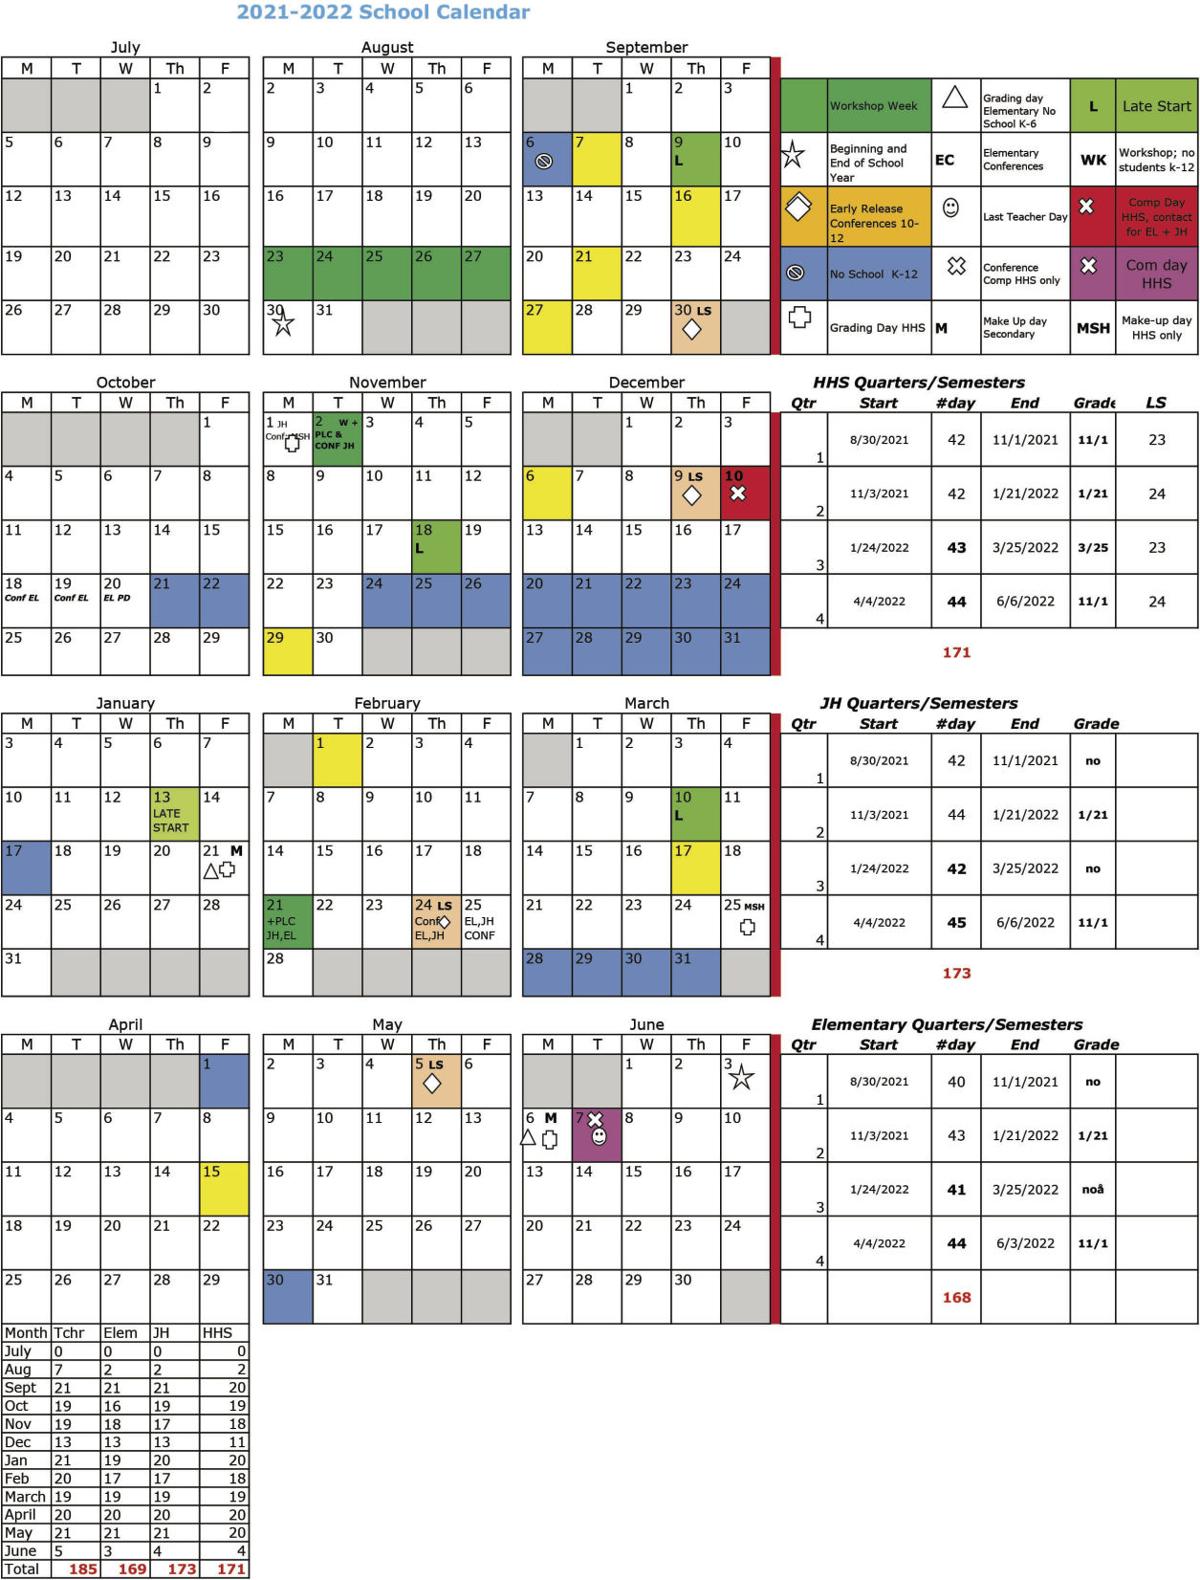 lawrence university calendar 2021 22 Hopkins School Board Approves 2020 21 And 2021 22 Calendars Hopkins Hometownsource Com lawrence university calendar 2021 22